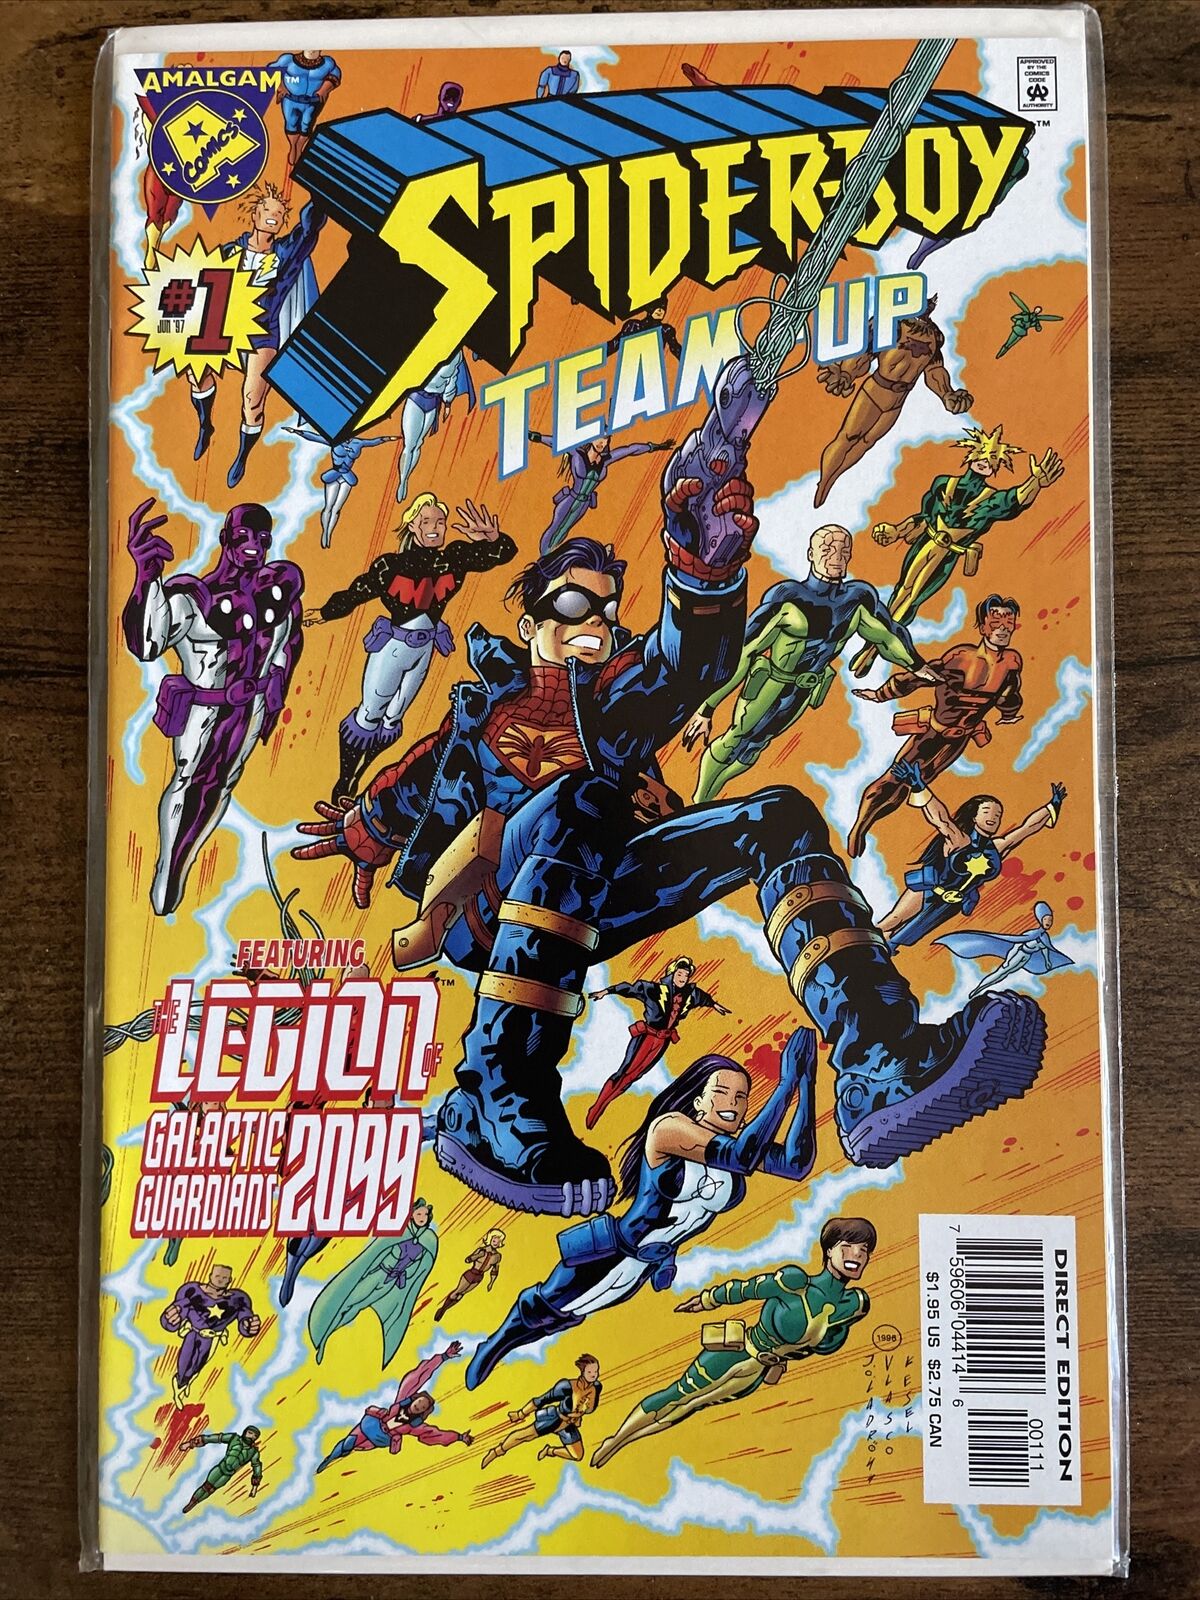 Spider-Boy Team Up #1 1997 One-Shot Amalgam Comics